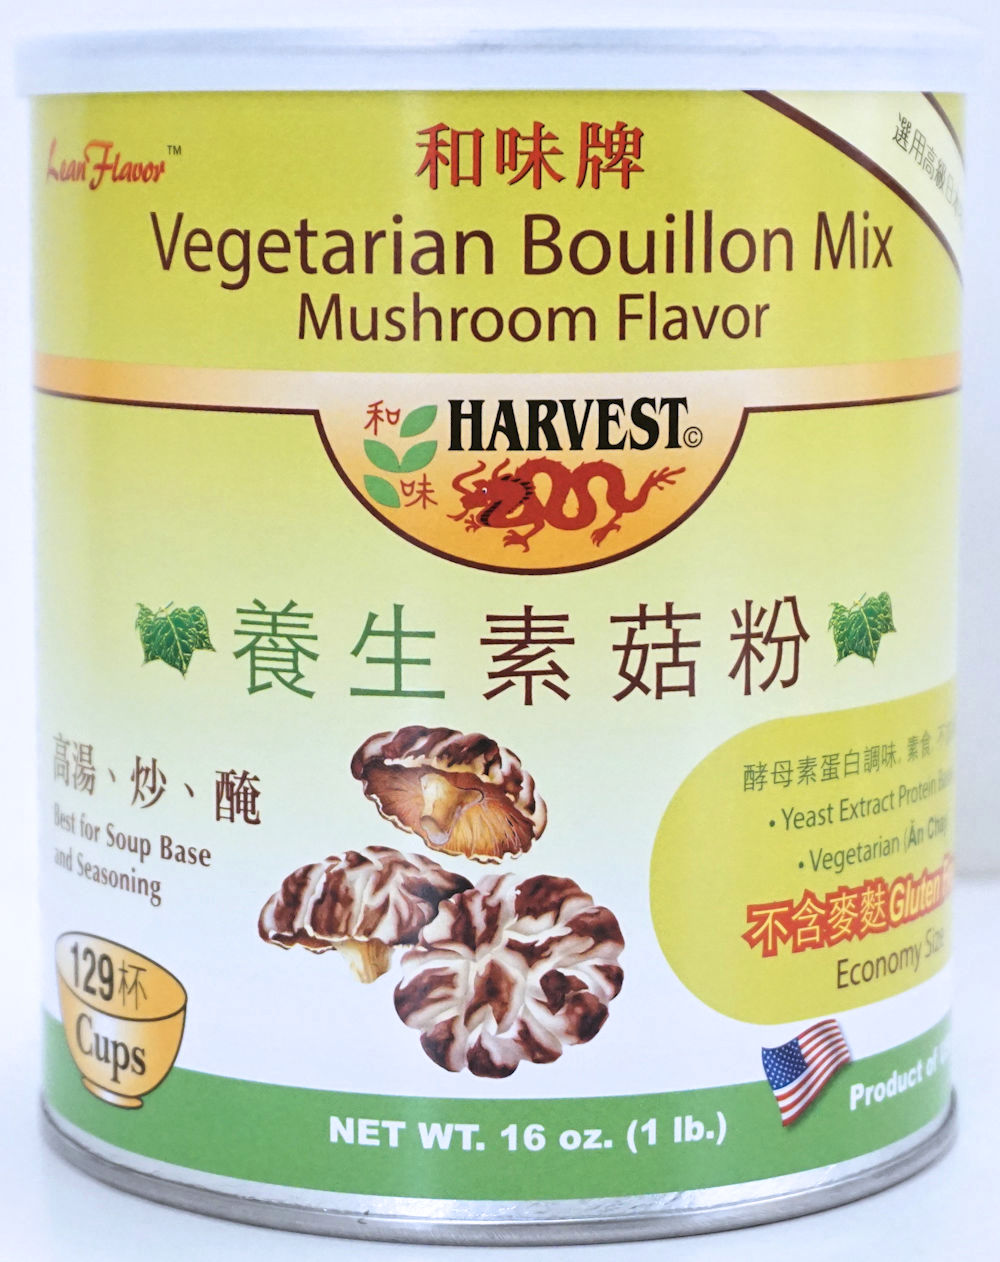 Harvest 2000 Vegetarian Bouillon Mix Mushroom Flavor